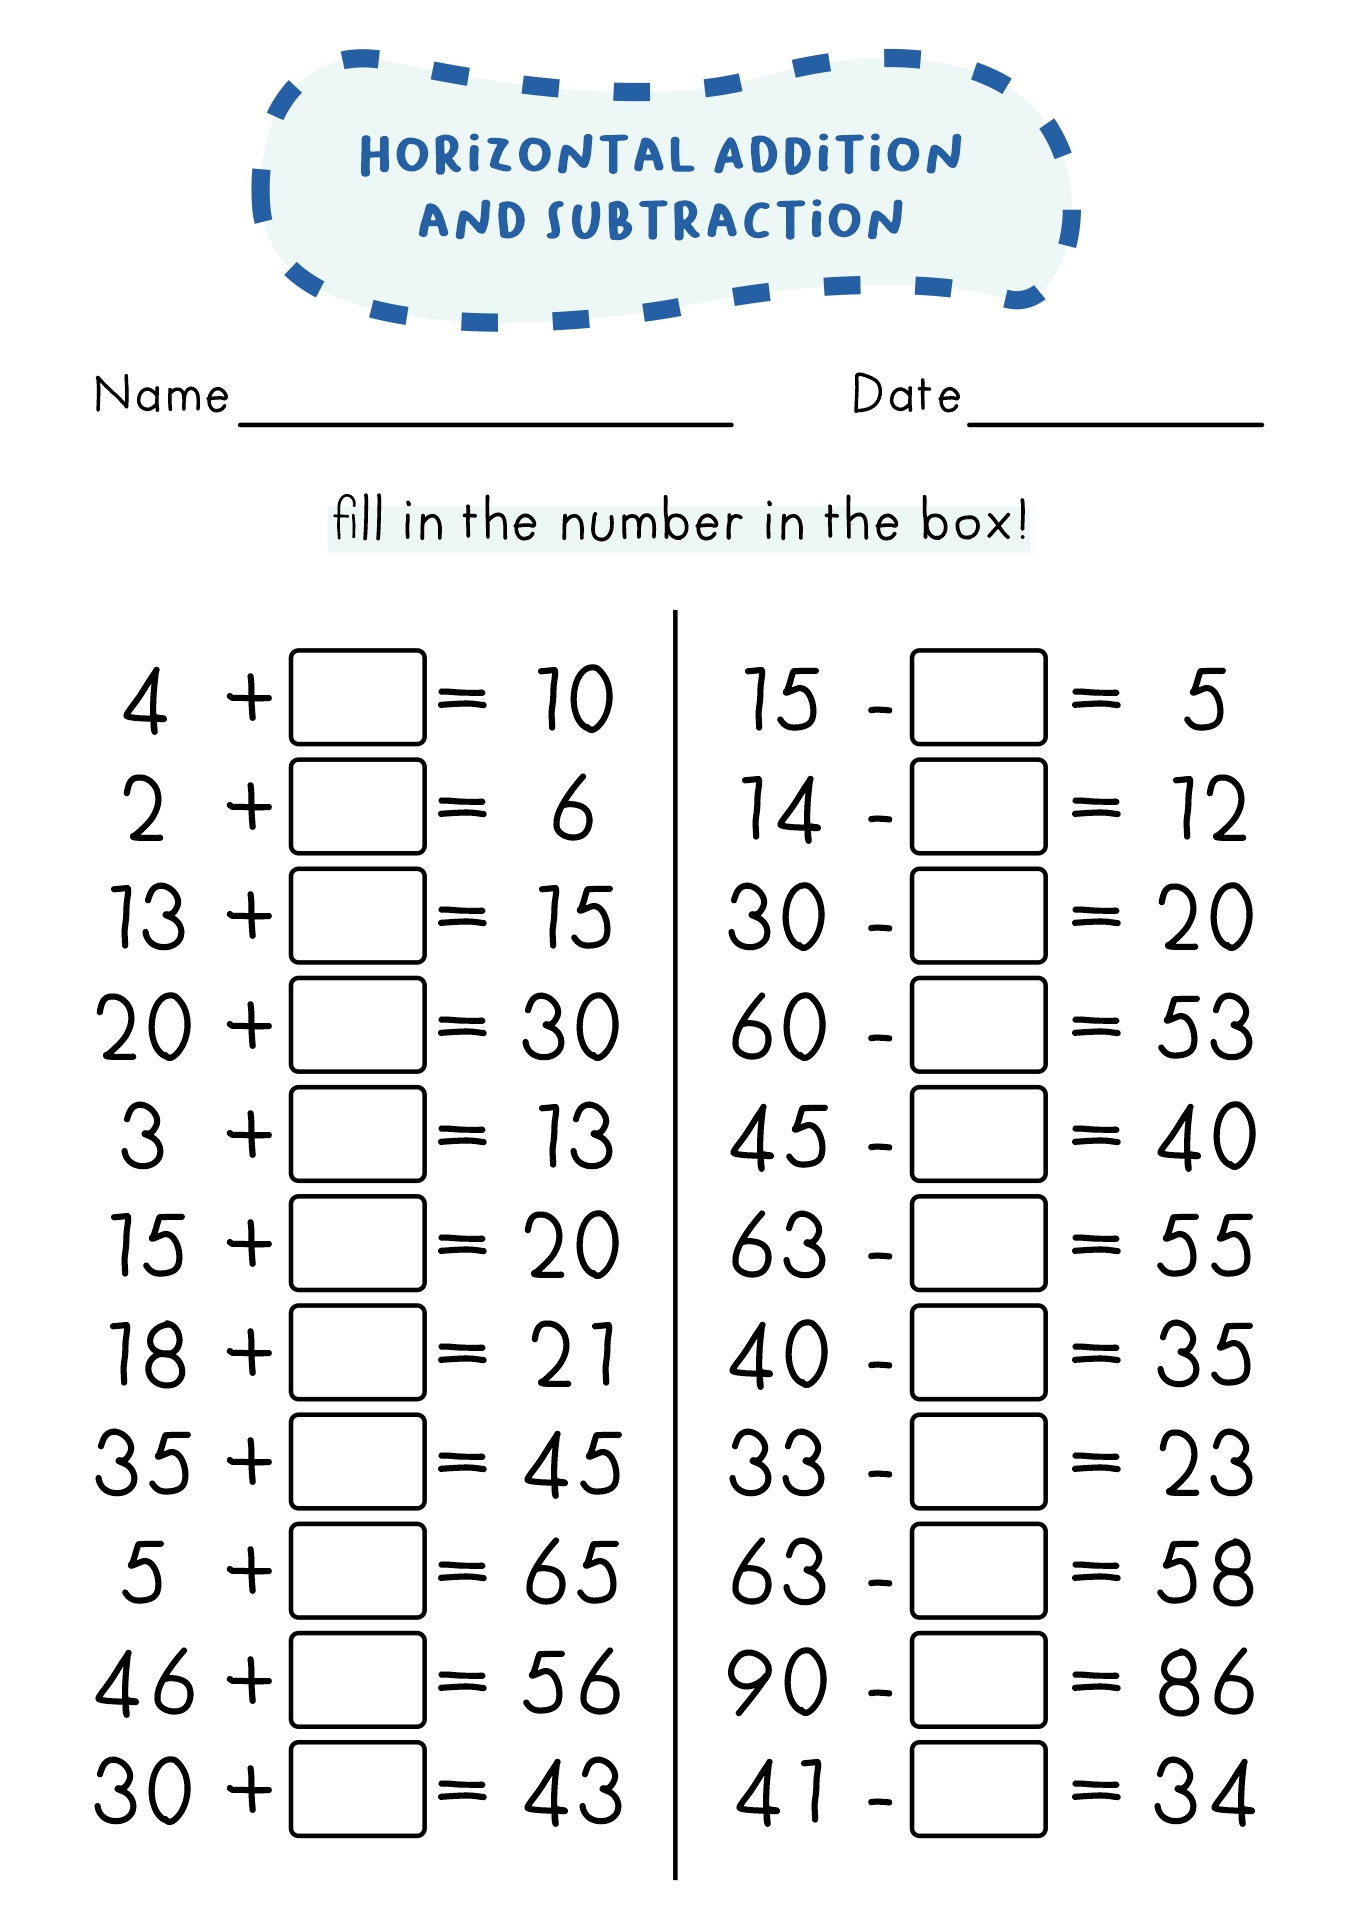 2nd Grade Math Activity Worksheets Image